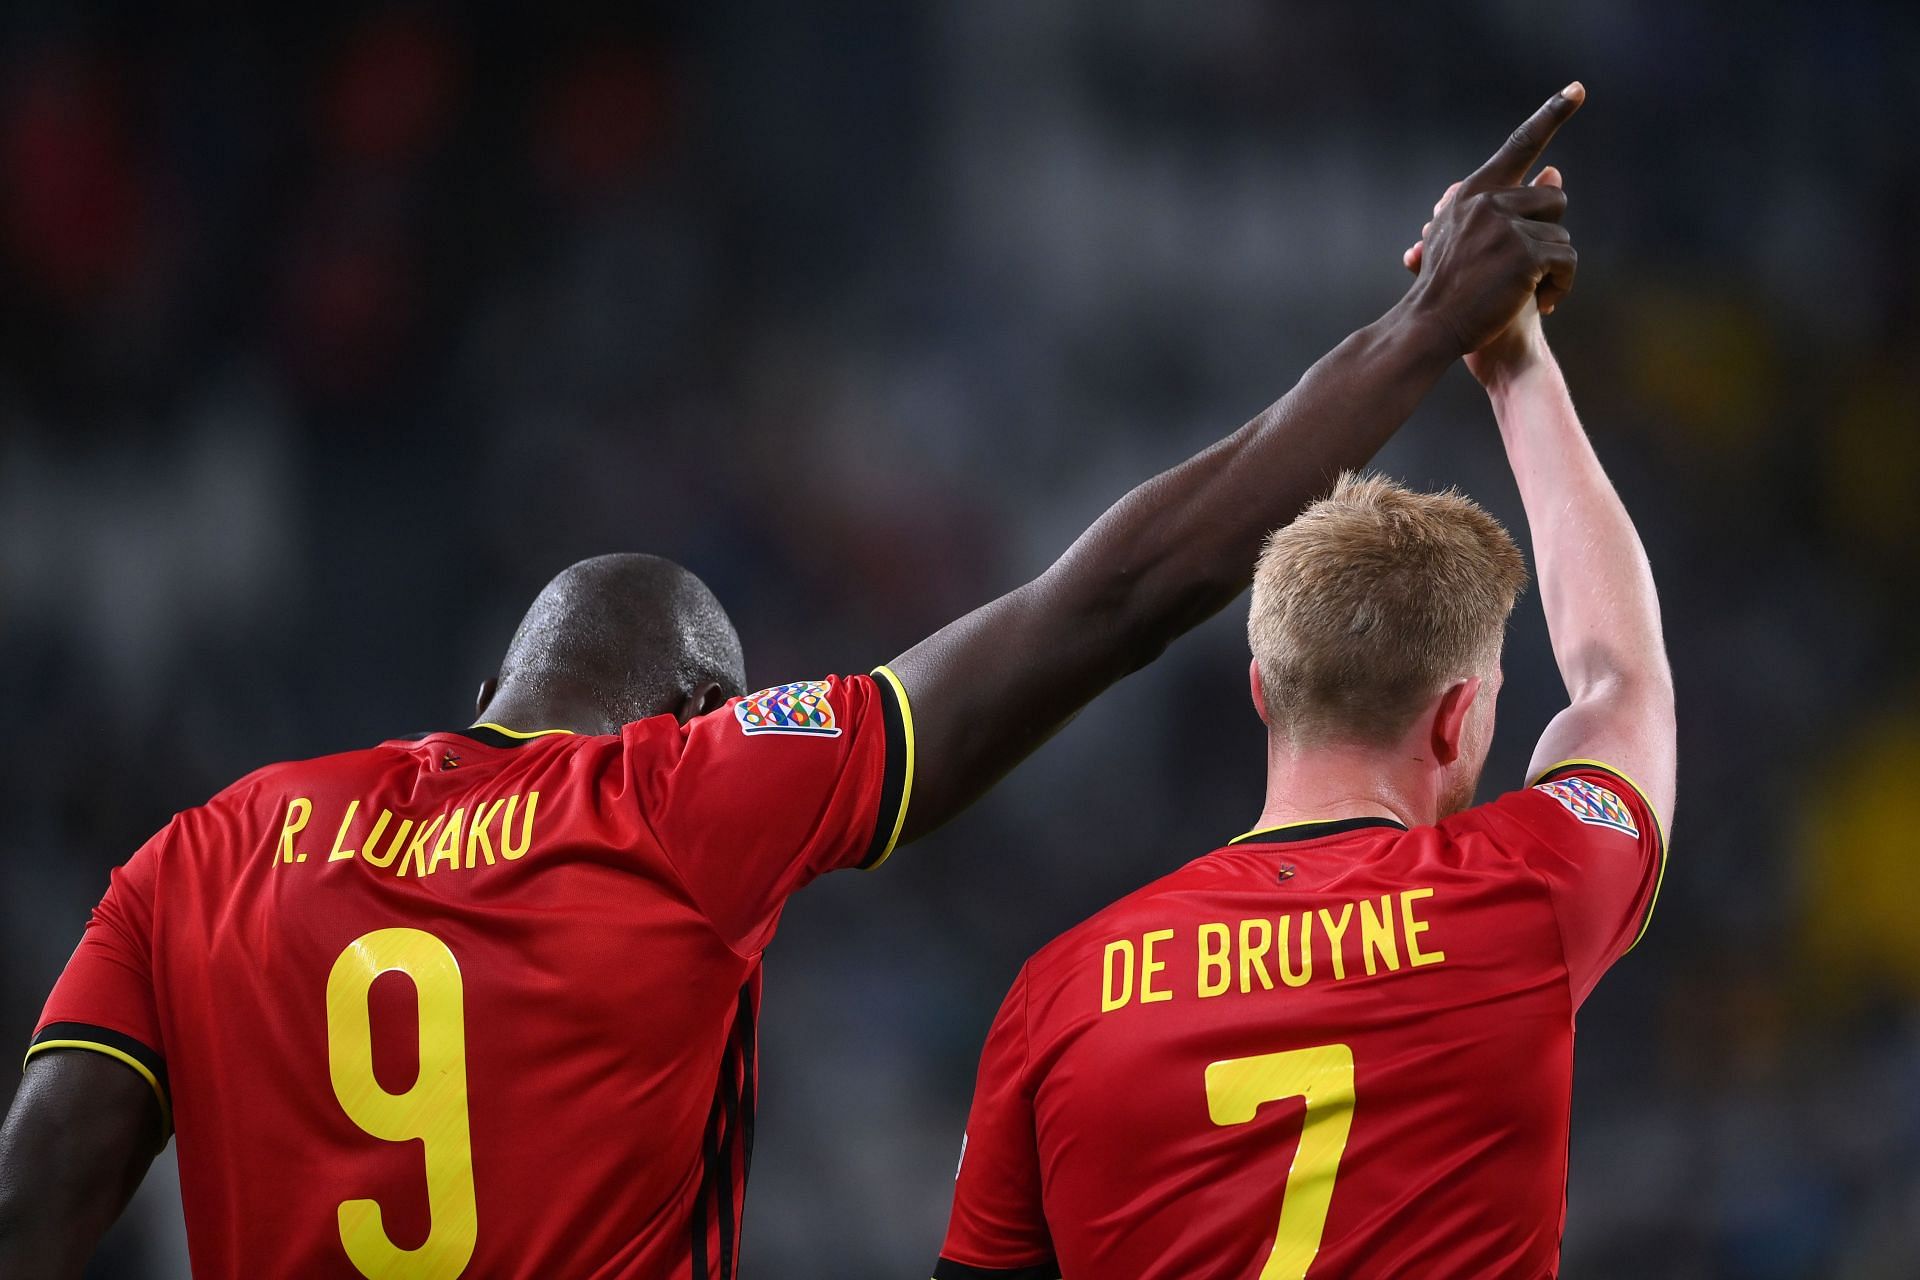 Romelu Lukaku (#9) and Kevin De Bruyne (#7) of the Belgium national team